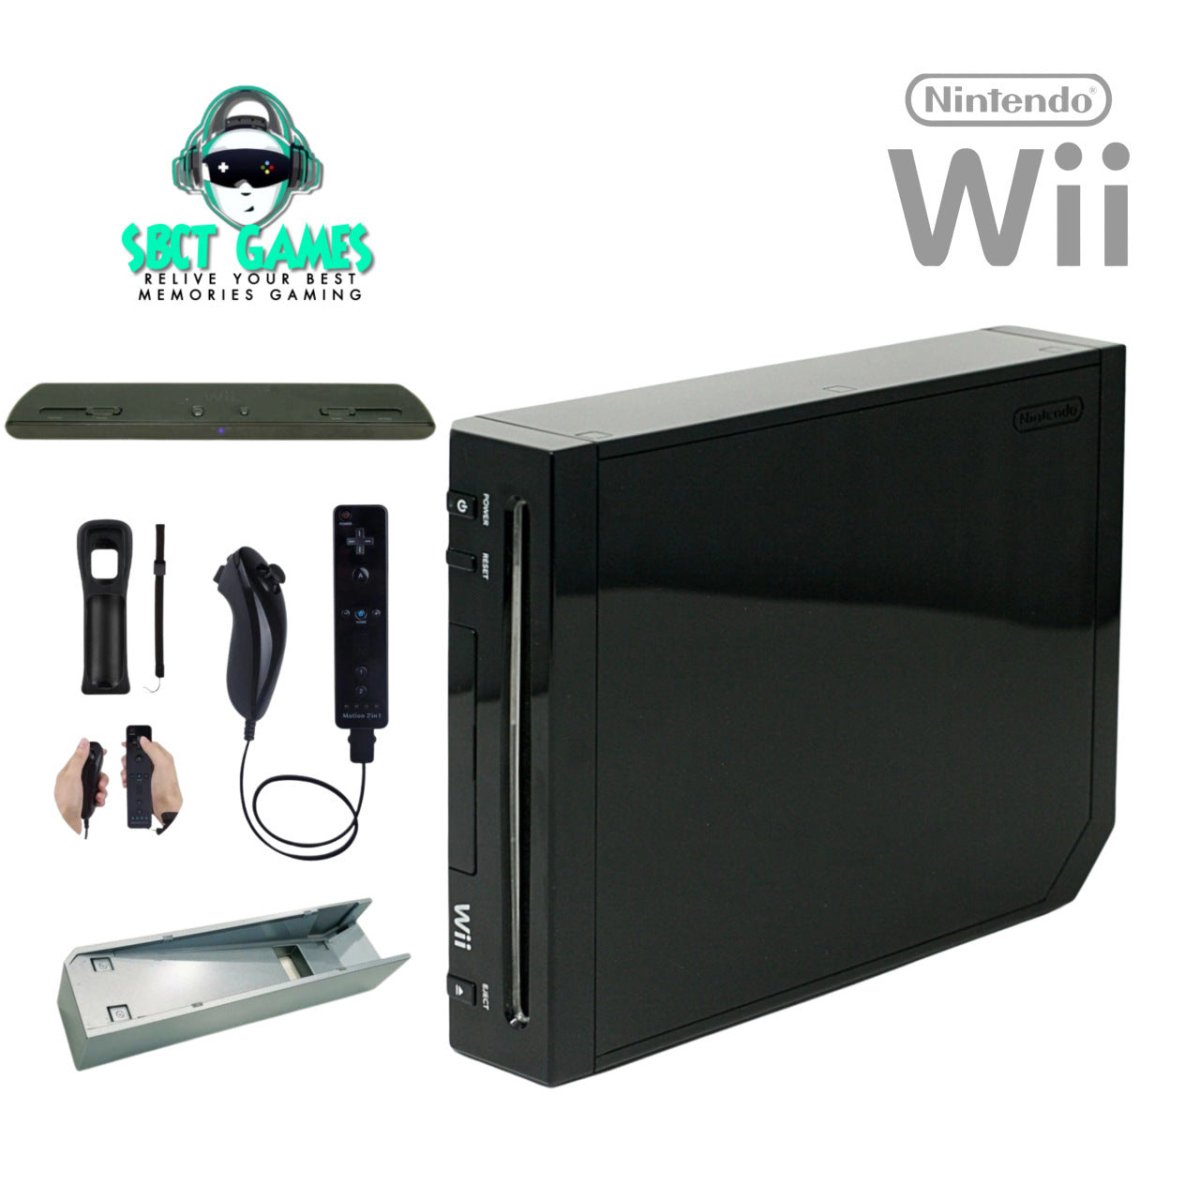 Nintendo Wii in Black